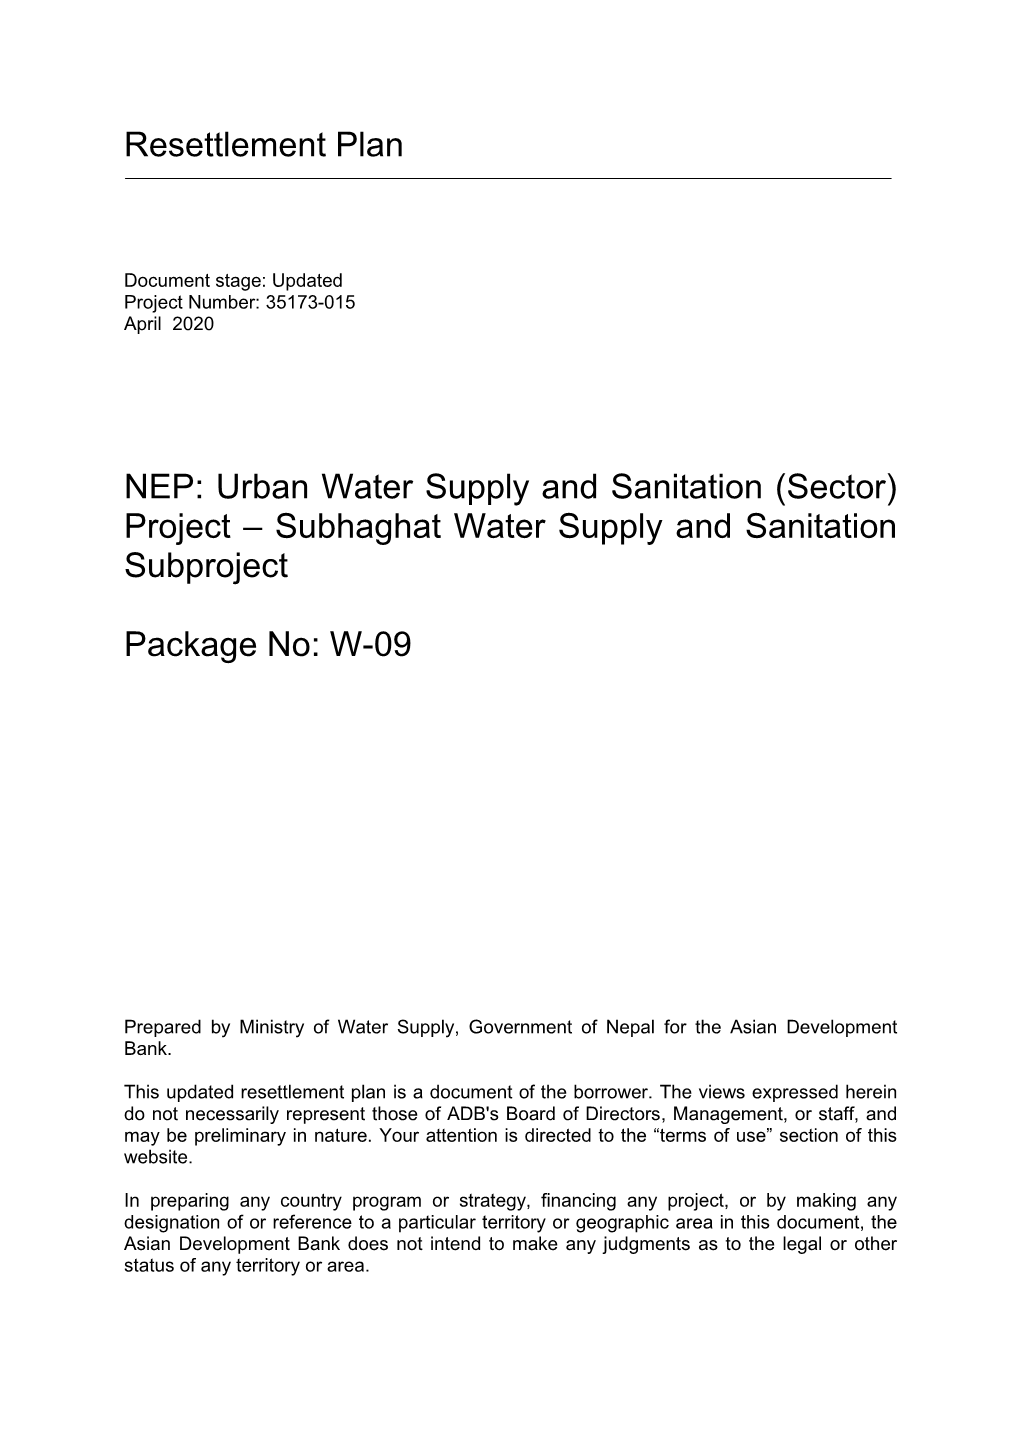 Urban Water Supply and Sanitation (Sector) Project – Subhaghat Water Supply and Sanitation Subproject